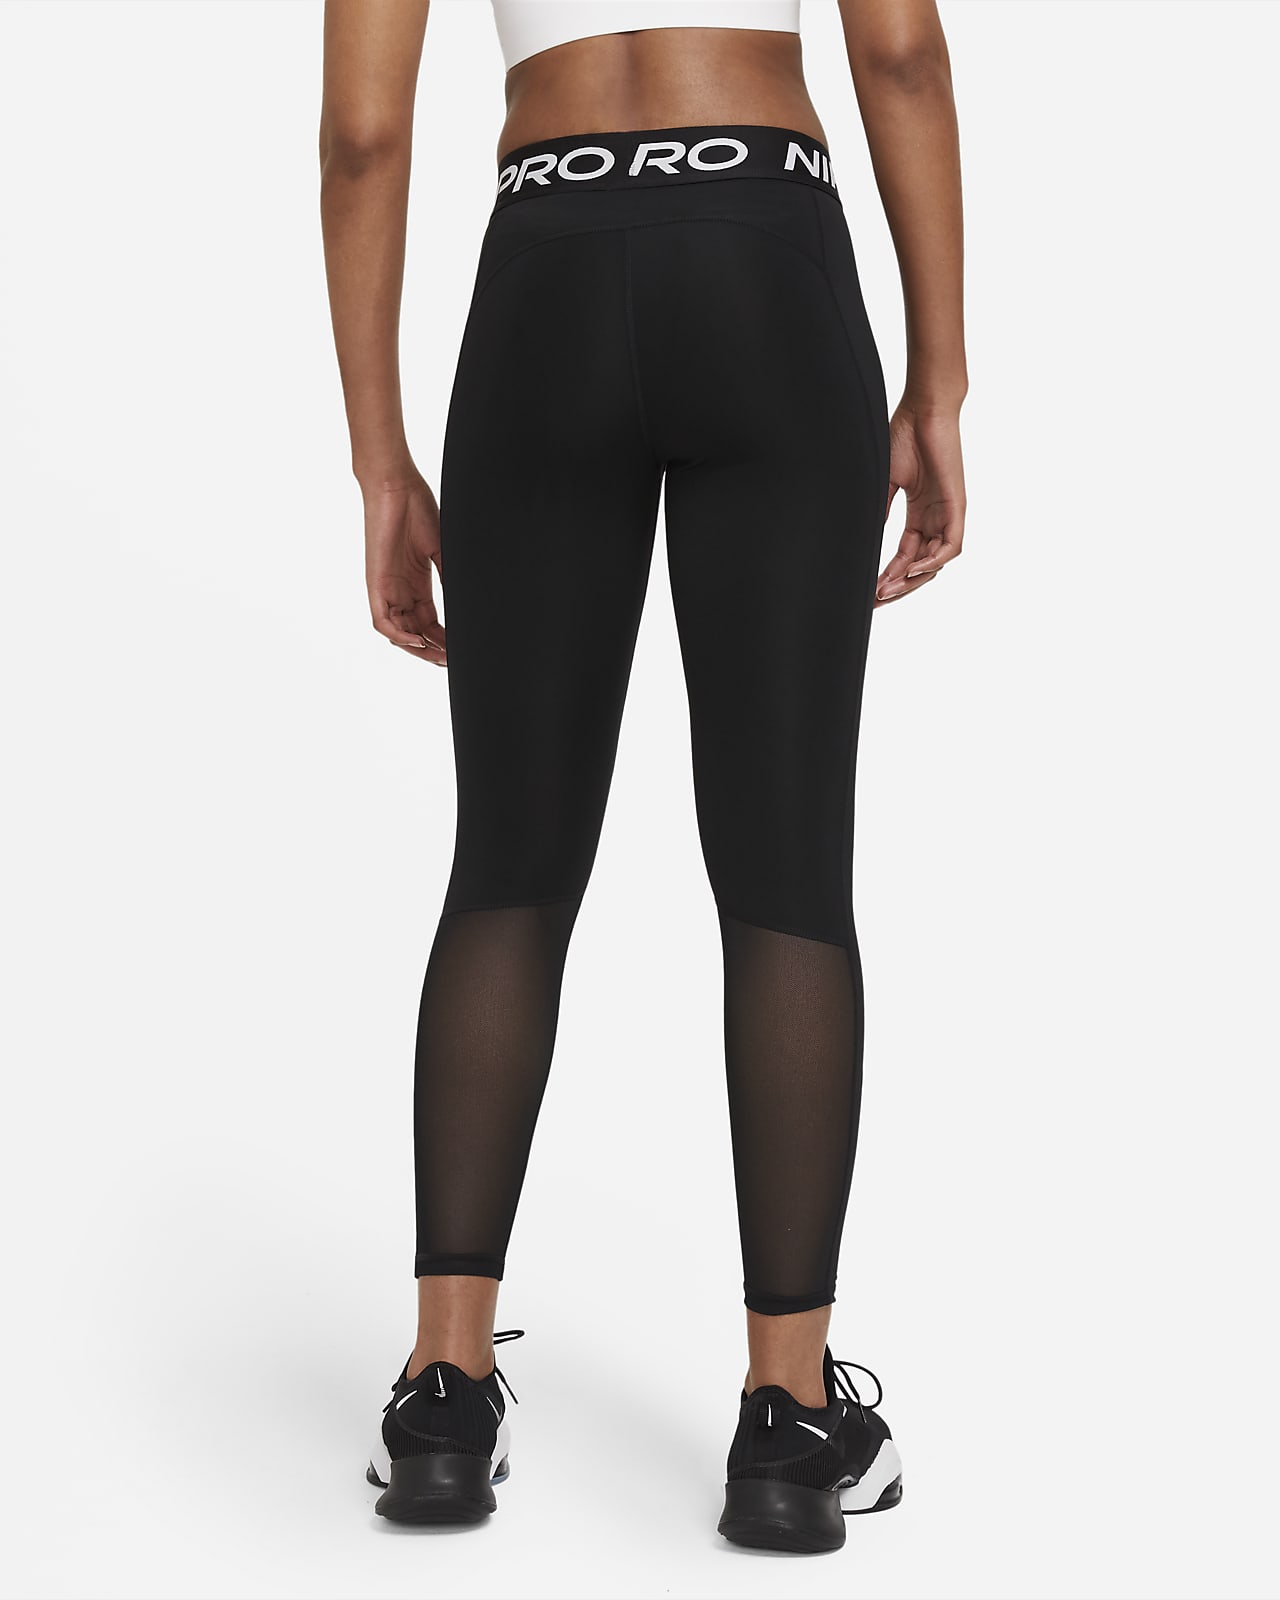 Leggings Asura Black | Sportleggings und Sporthosen für Damen | WomenSecret